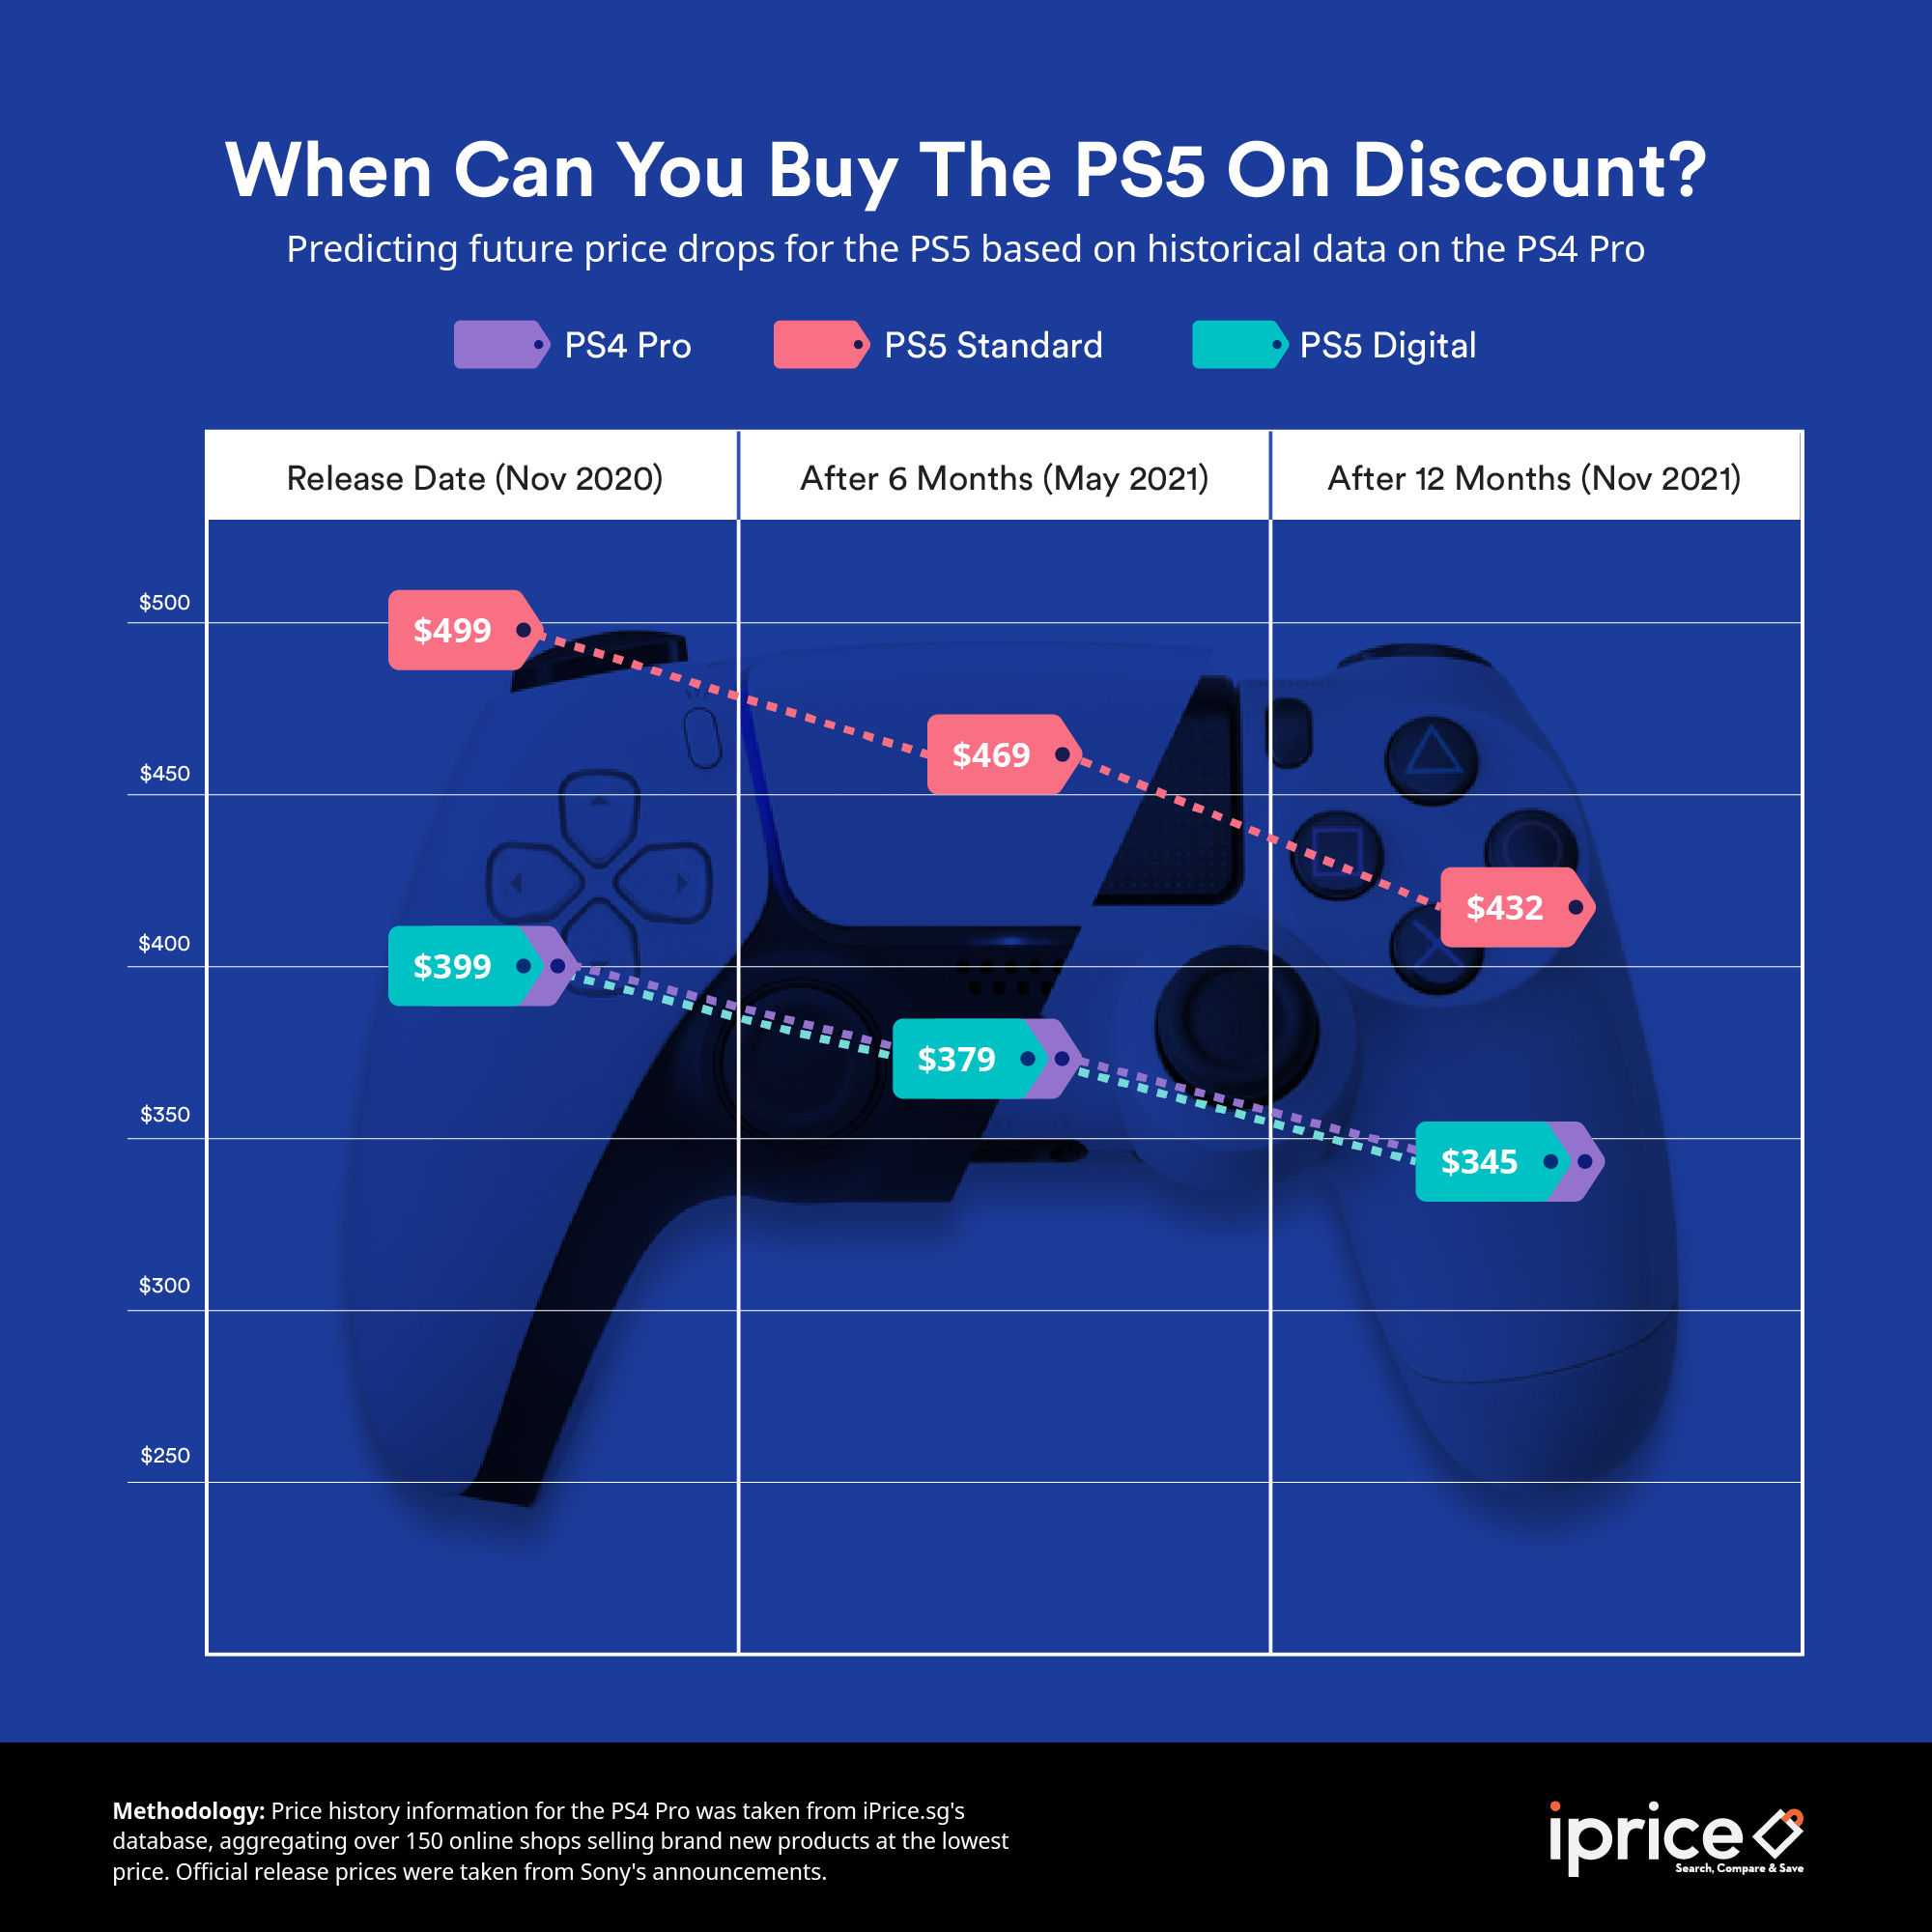 Sony PS5 iPrice prijsdaling rapport